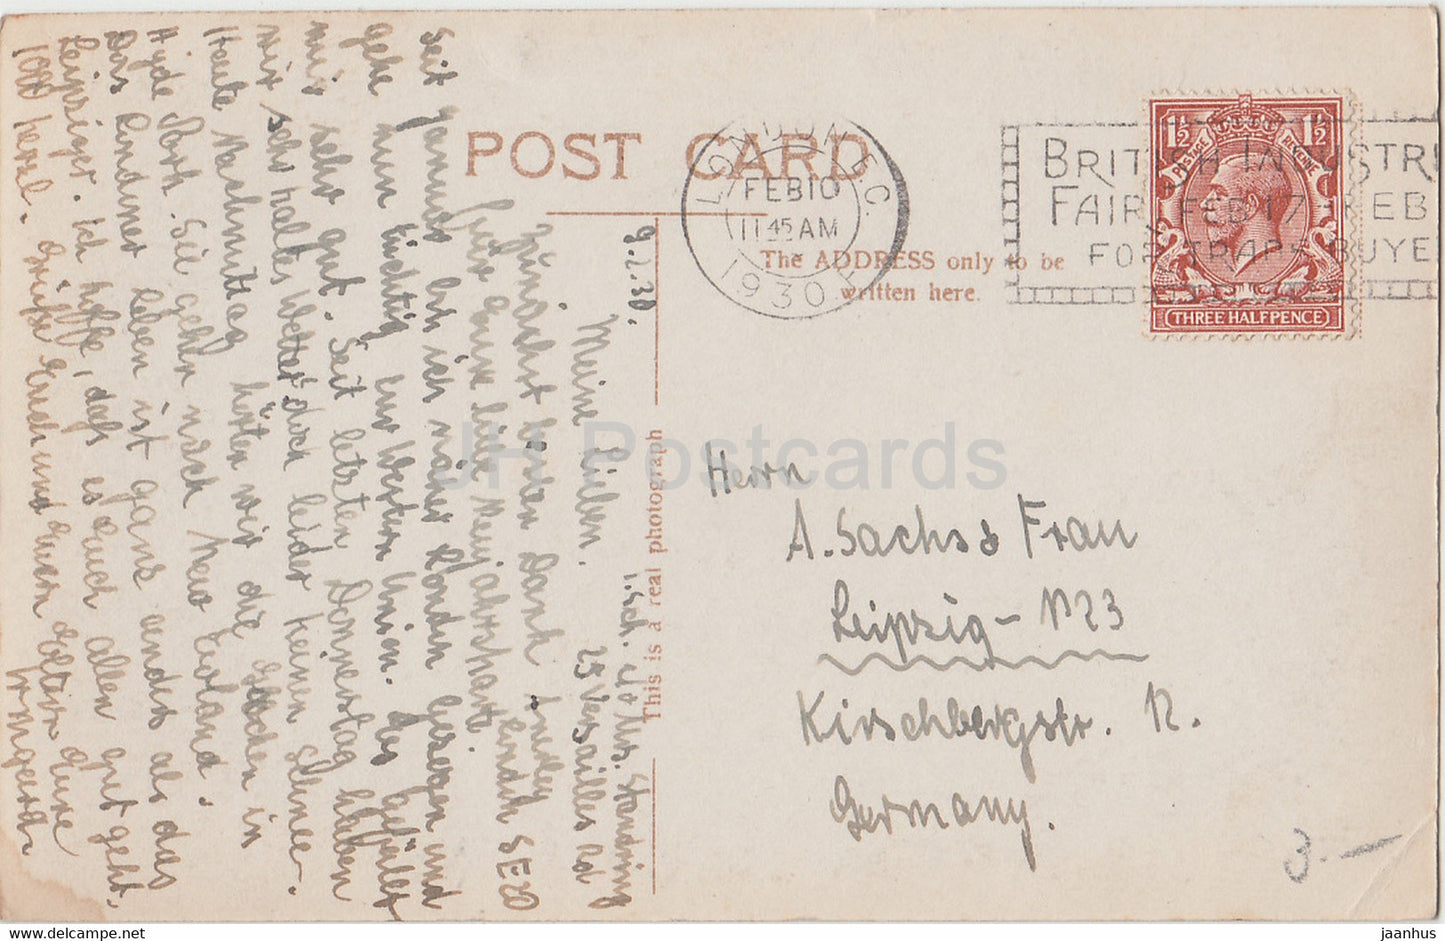 London - Westminster Abbey - 25 - old postcard - 1930 - England - United Kingdom - used